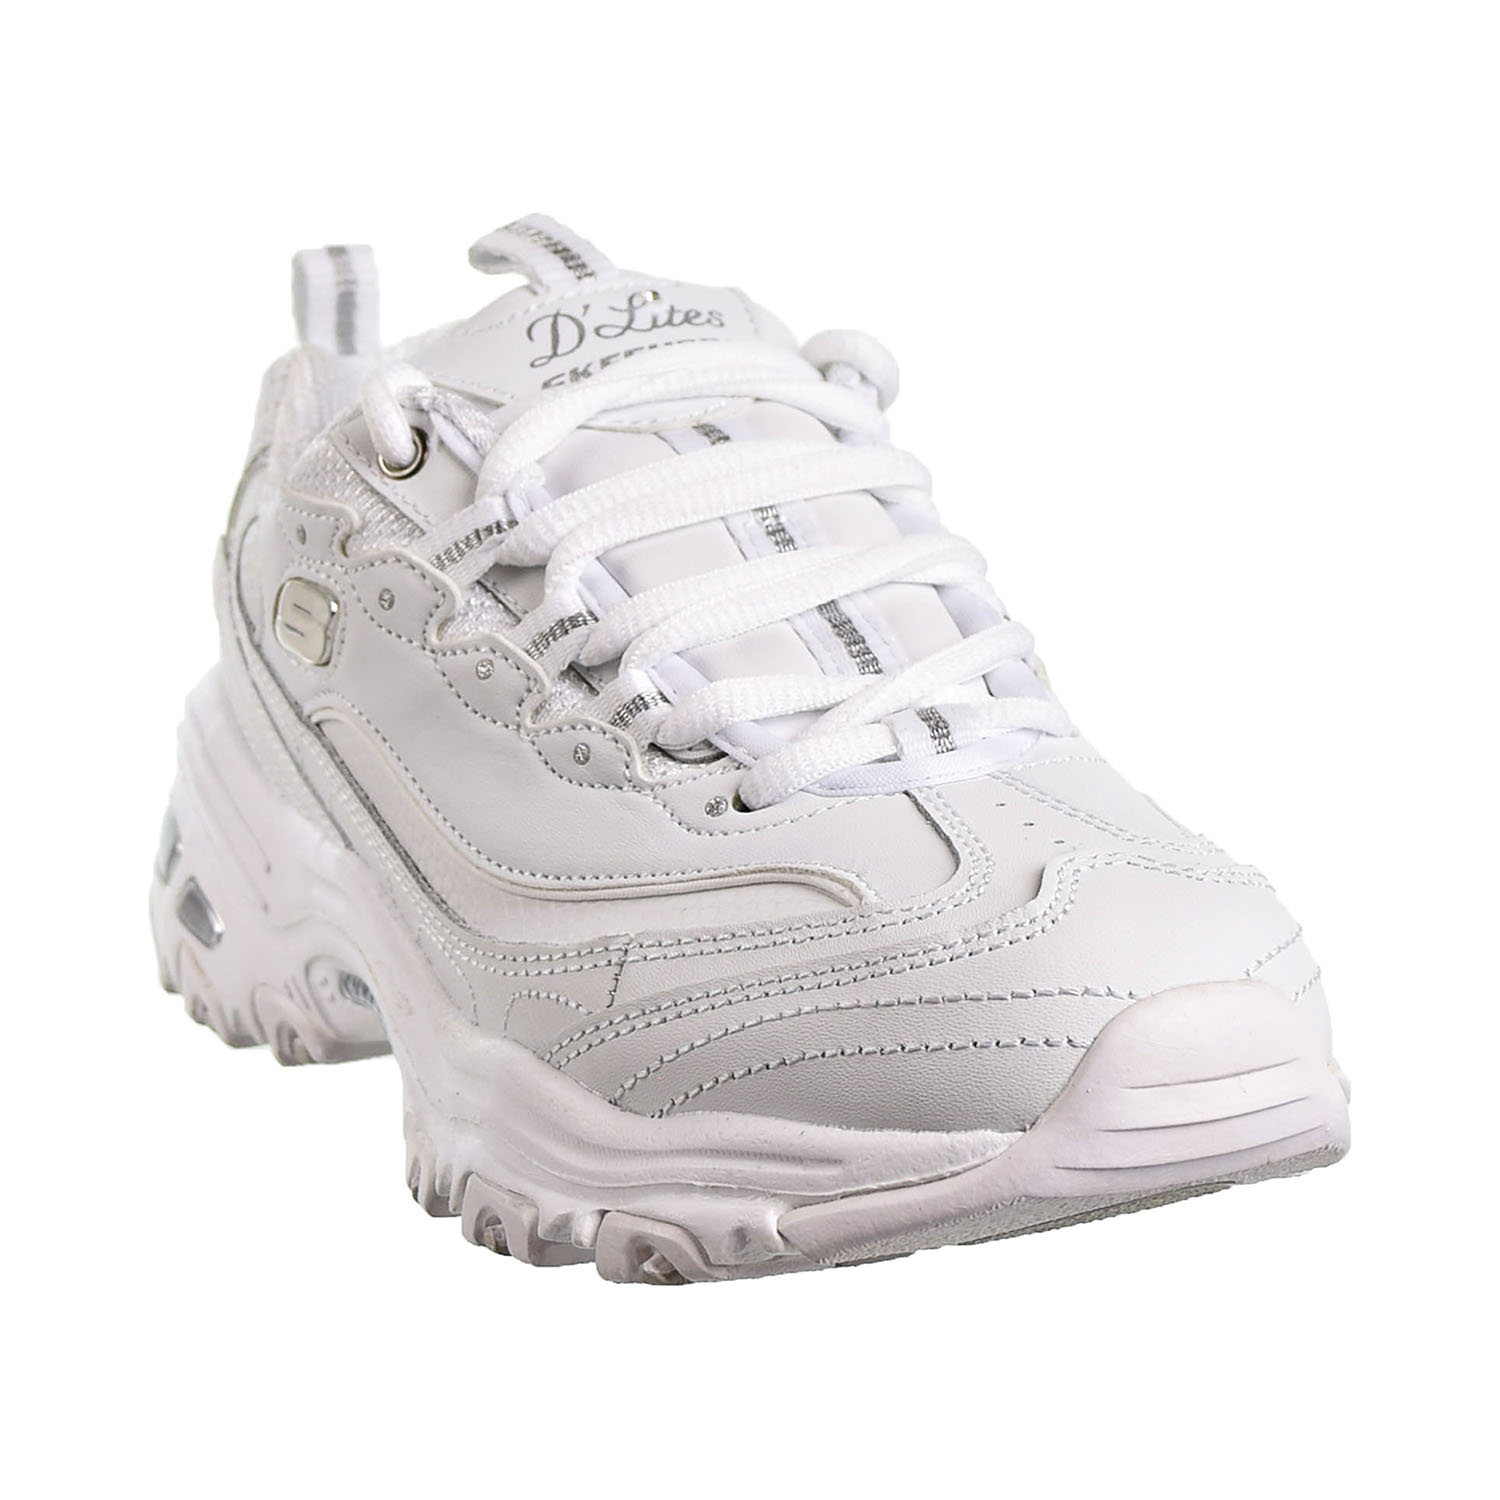 Skechers D'Lites Fresh Start Women's Shoes White-Silver 11931-WSL | eBay